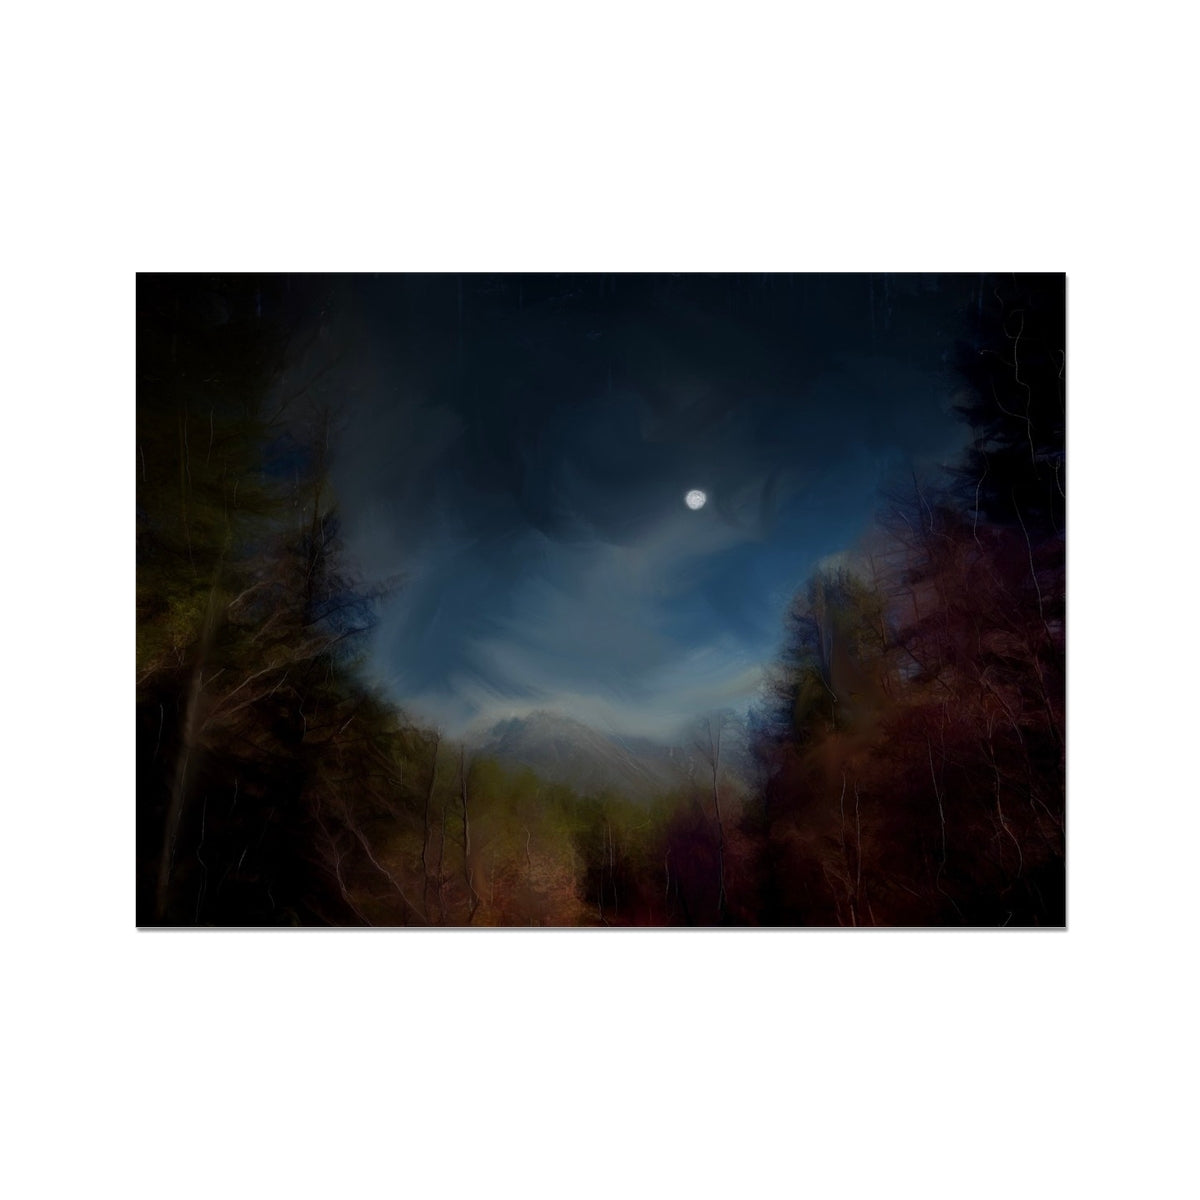 Glencoe Lochan Moonlight Painting | Fine Art Prints From Scotland-Unframed Prints-Scottish Lochs & Mountains Art Gallery-A2 Landscape-Paintings, Prints, Homeware, Art Gifts From Scotland By Scottish Artist Kevin Hunter